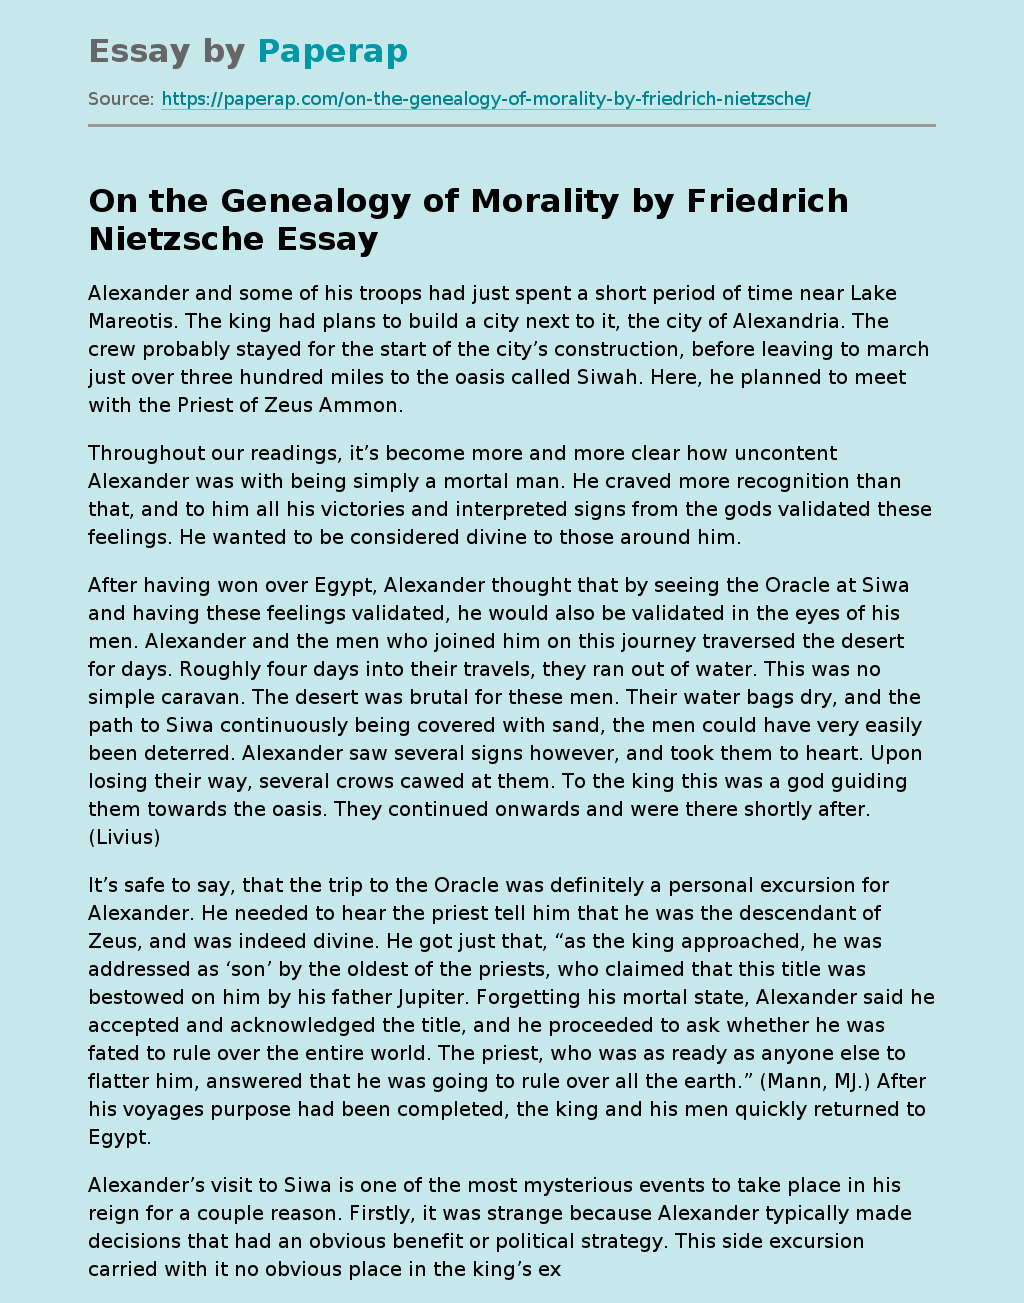 On the Genealogy of Morality by Friedrich Nietzsche